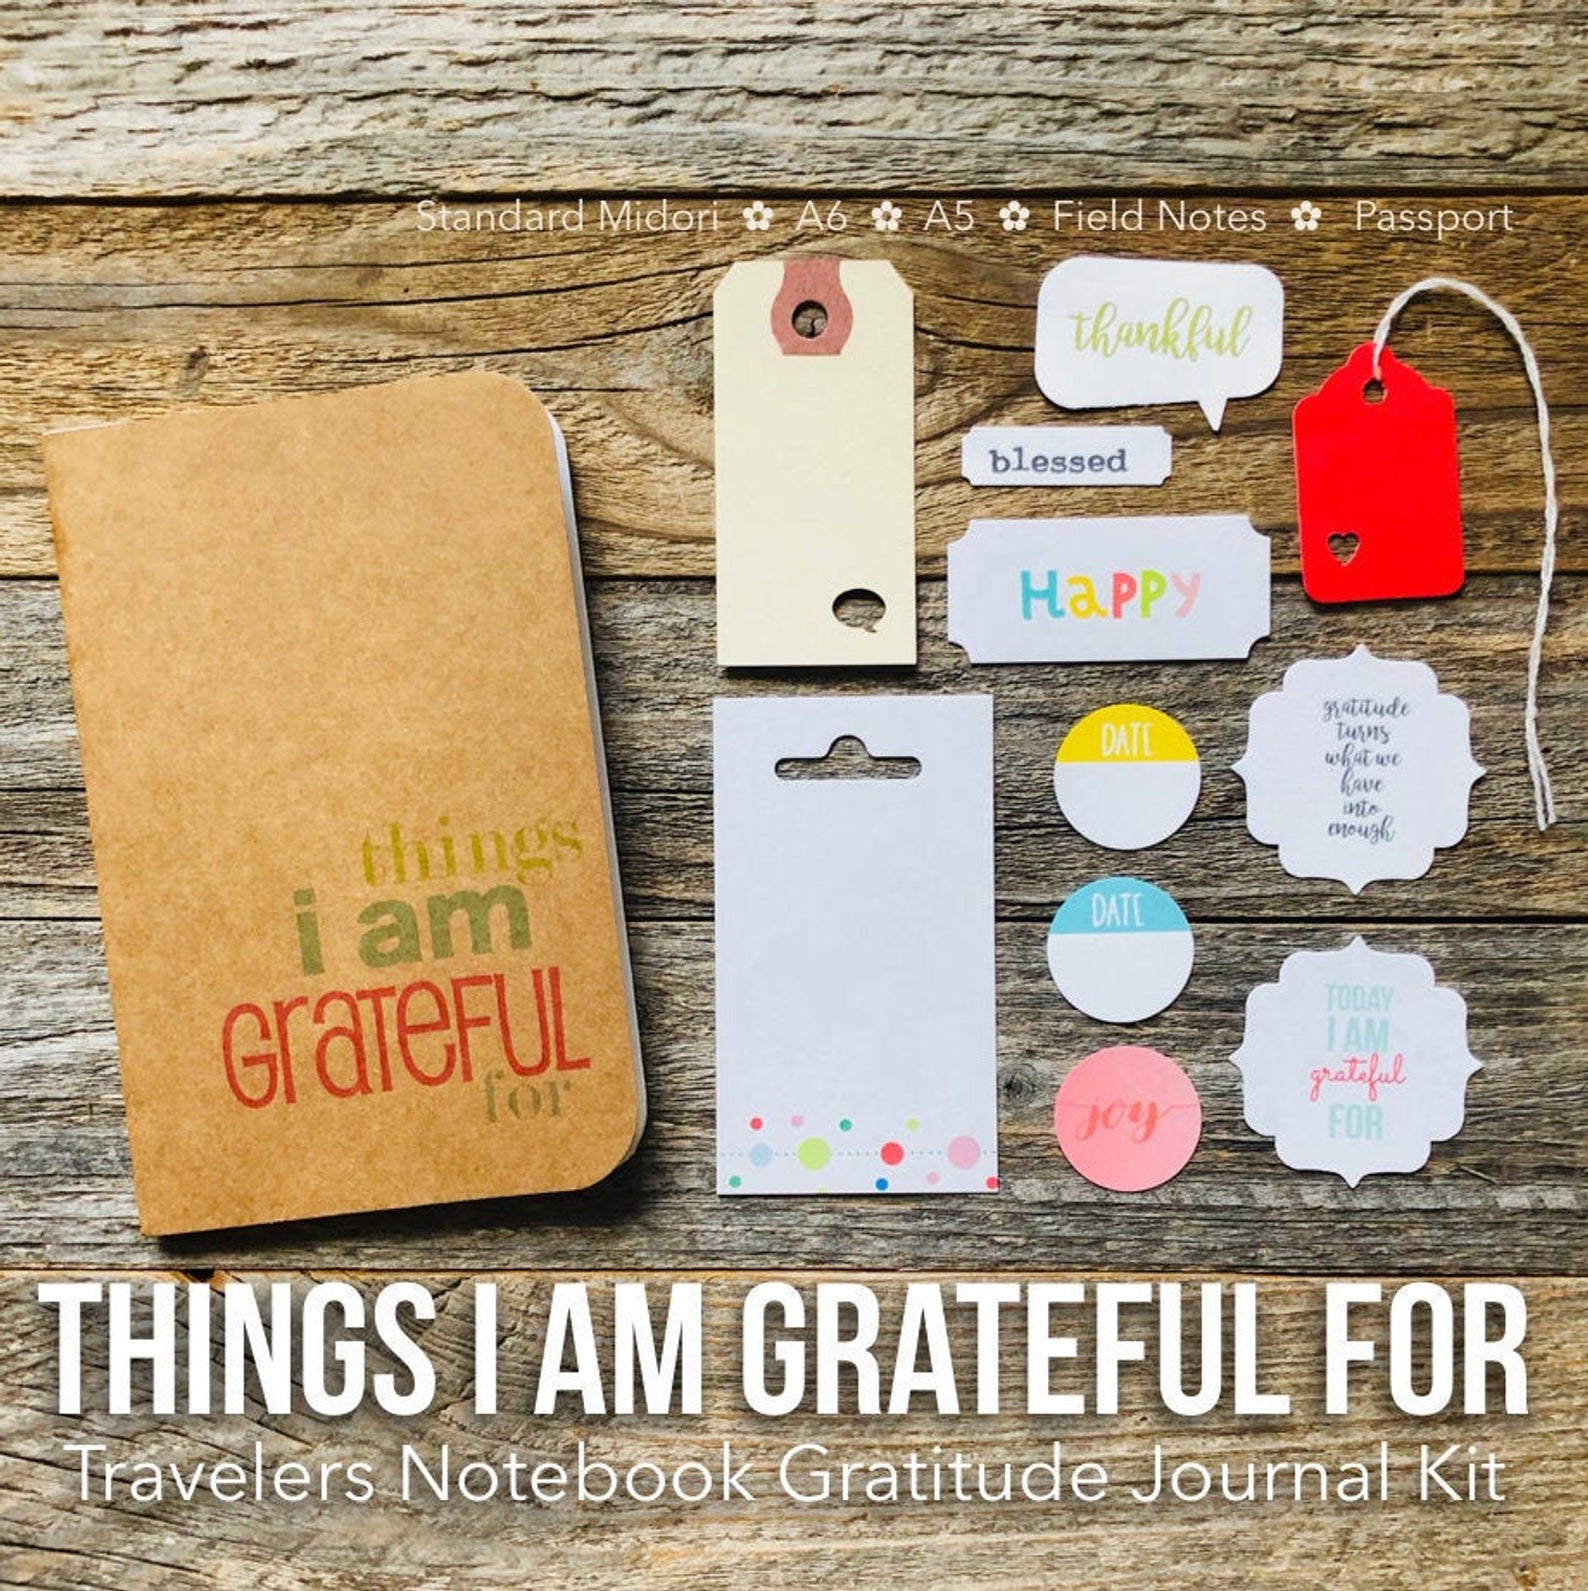 #travelers notebook #gratitude journal #watercolors #grateful #gratitude # reflection journal #mindset #journaling